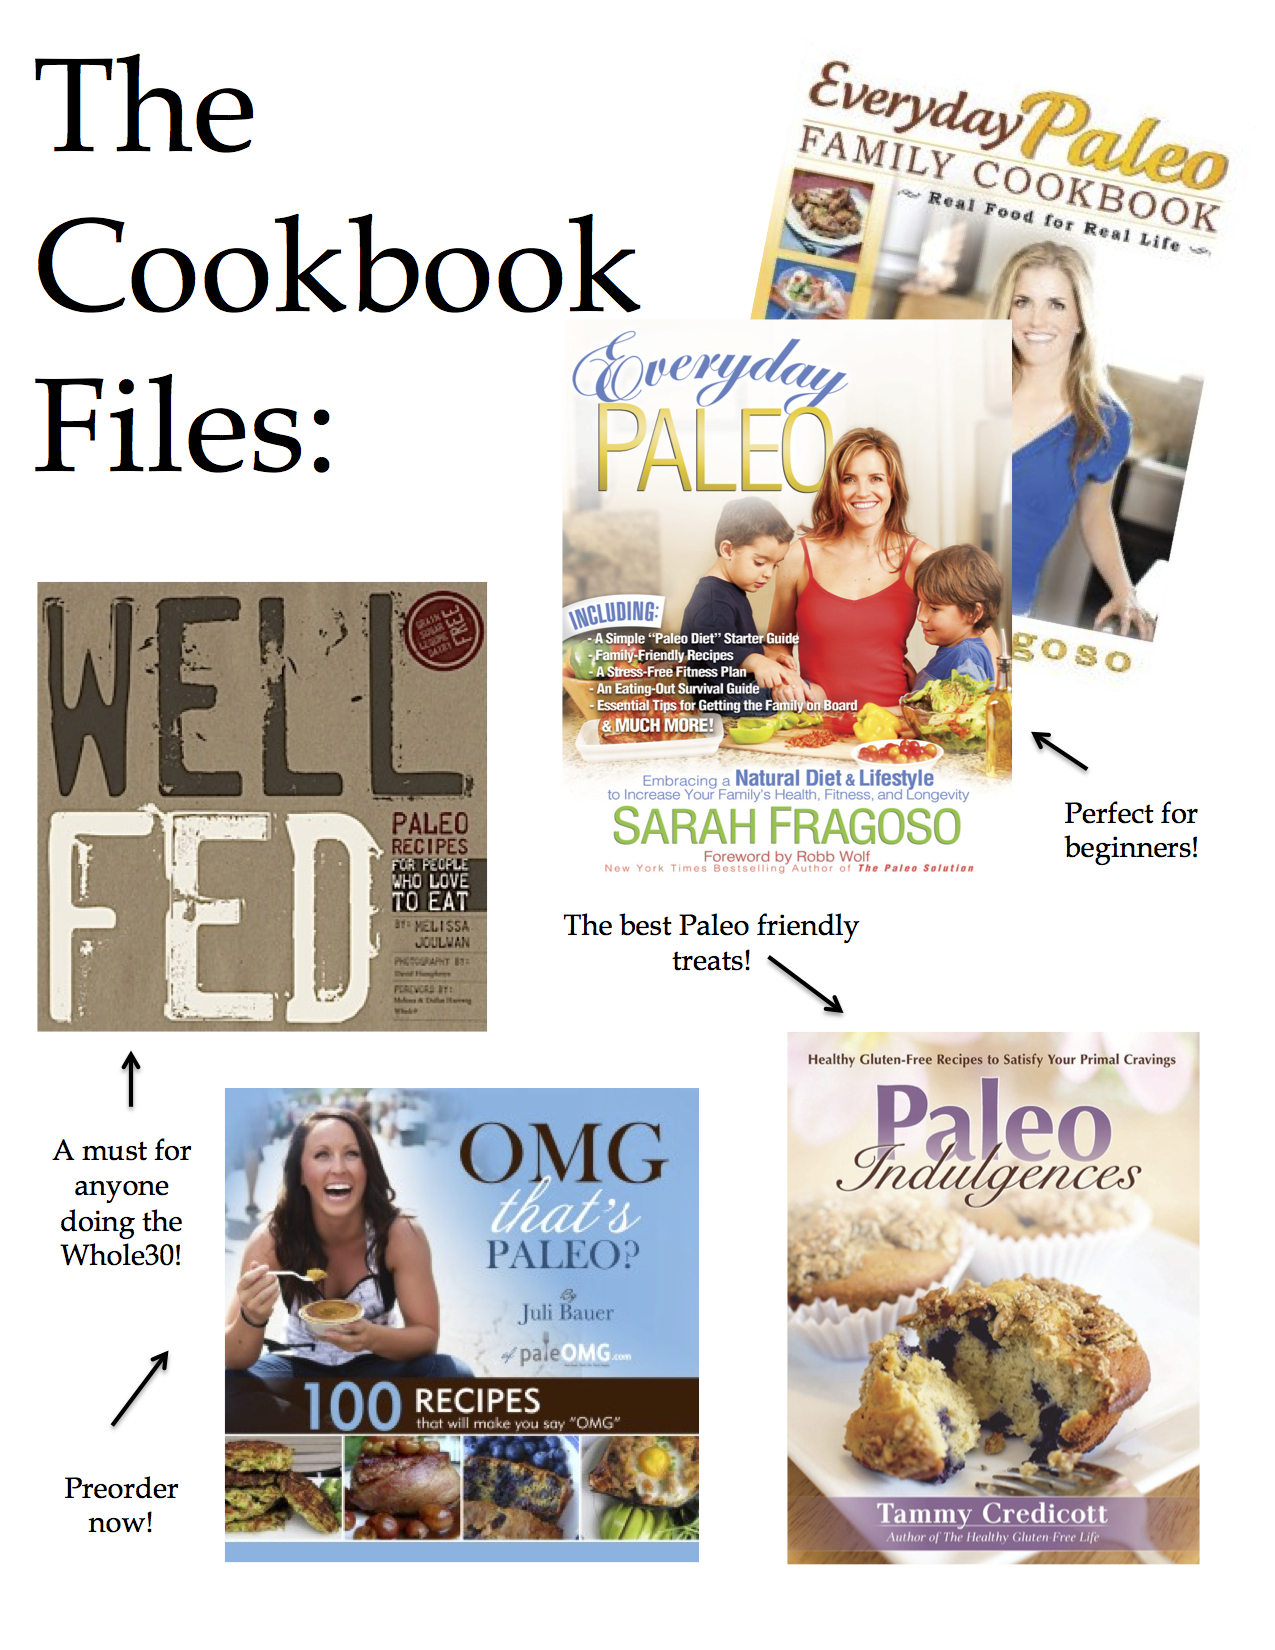 Paleo Cookbook Review